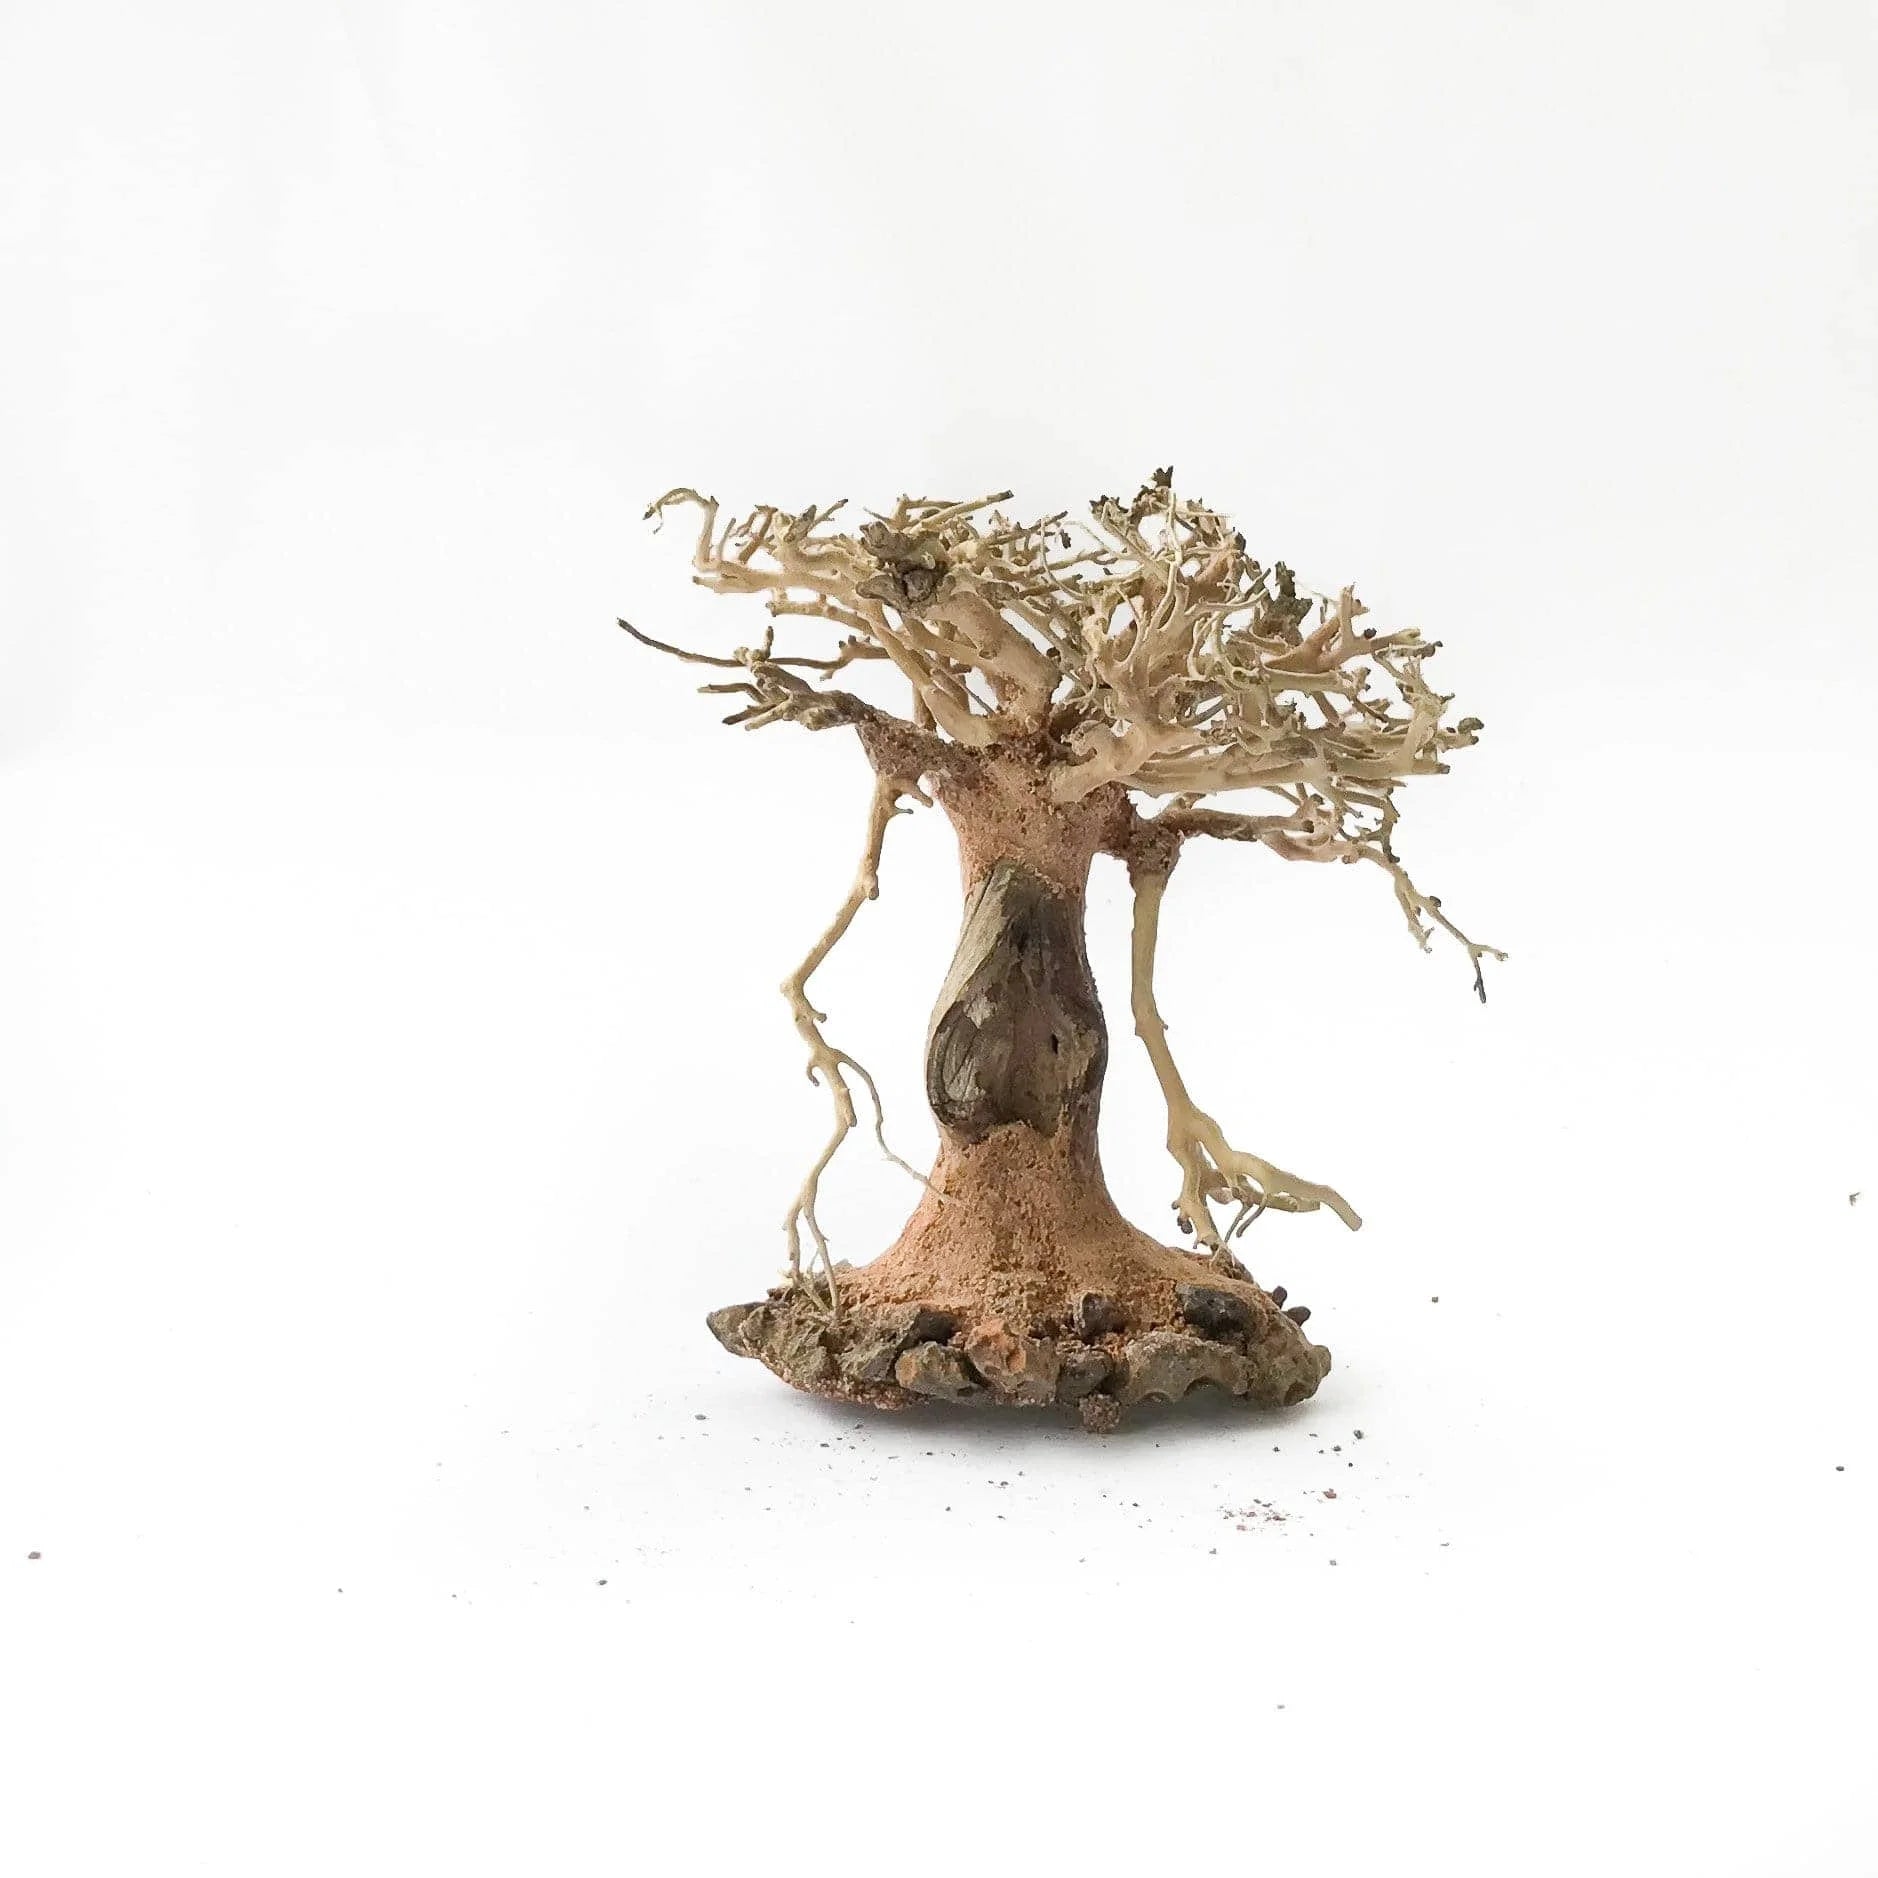 Miniature Bonsai Driftwood on Volcanic Rock - 10- 15cm Tall